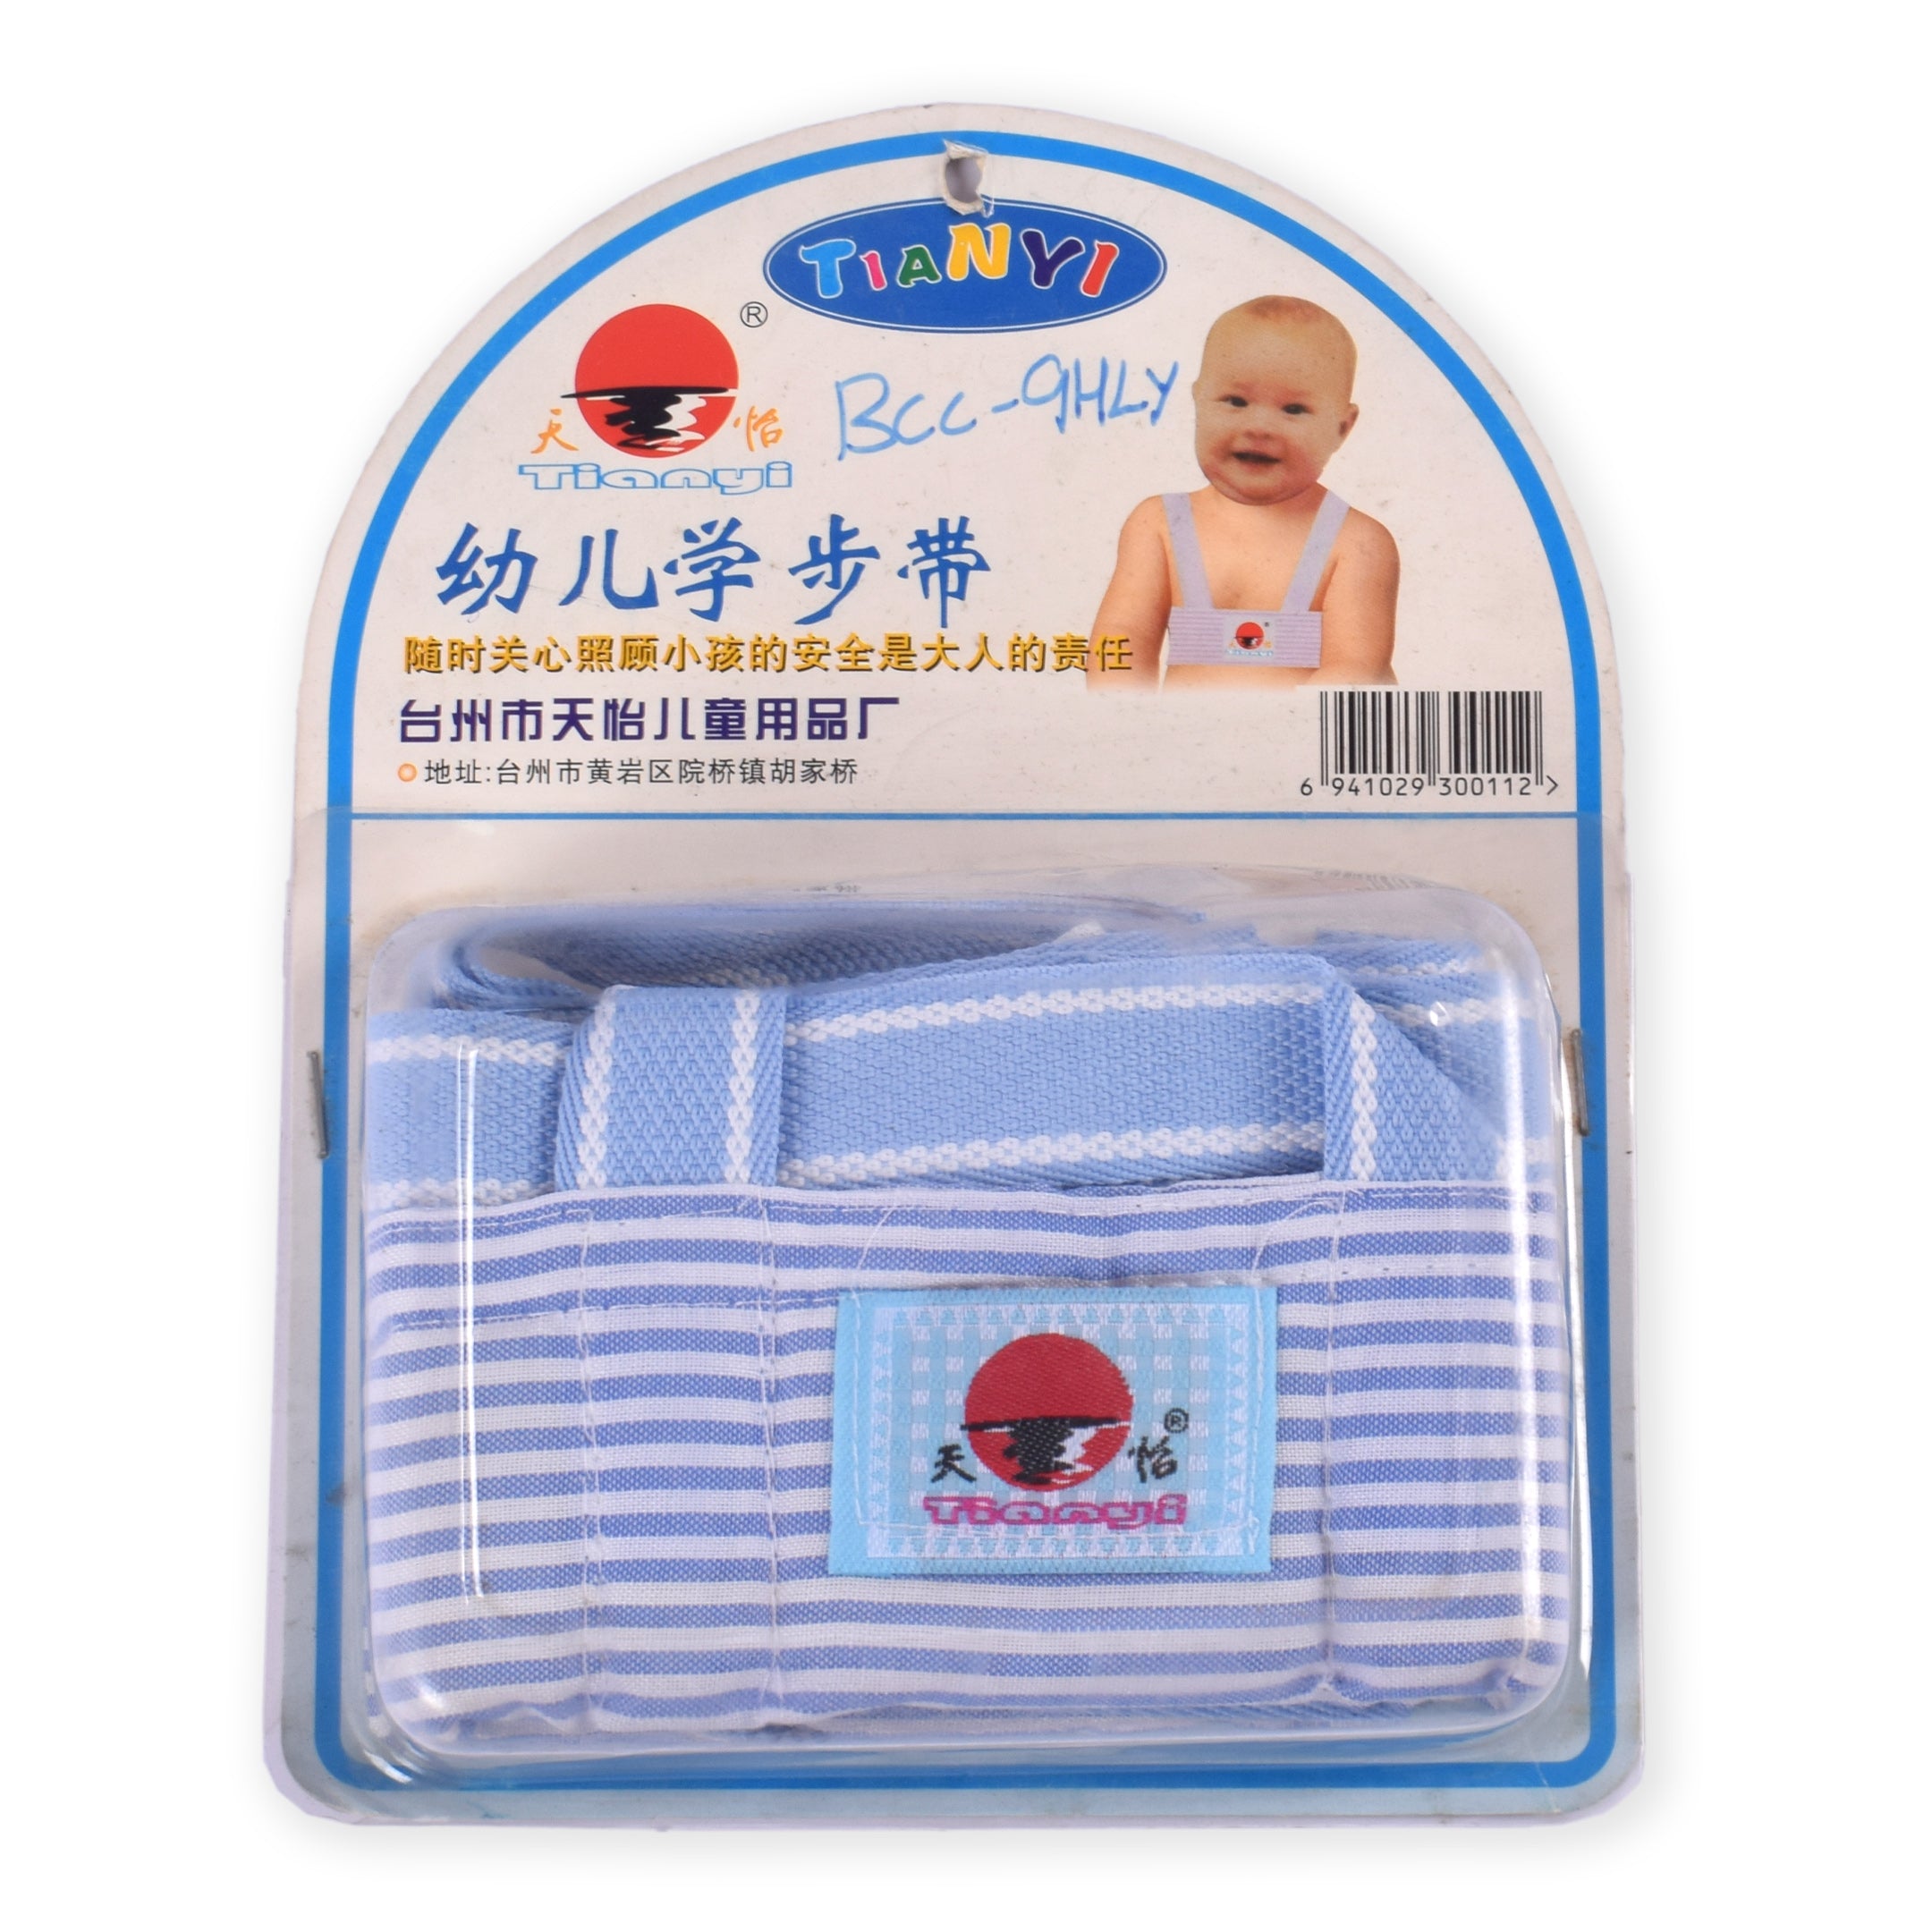 Tianyi Baby Harness Belt